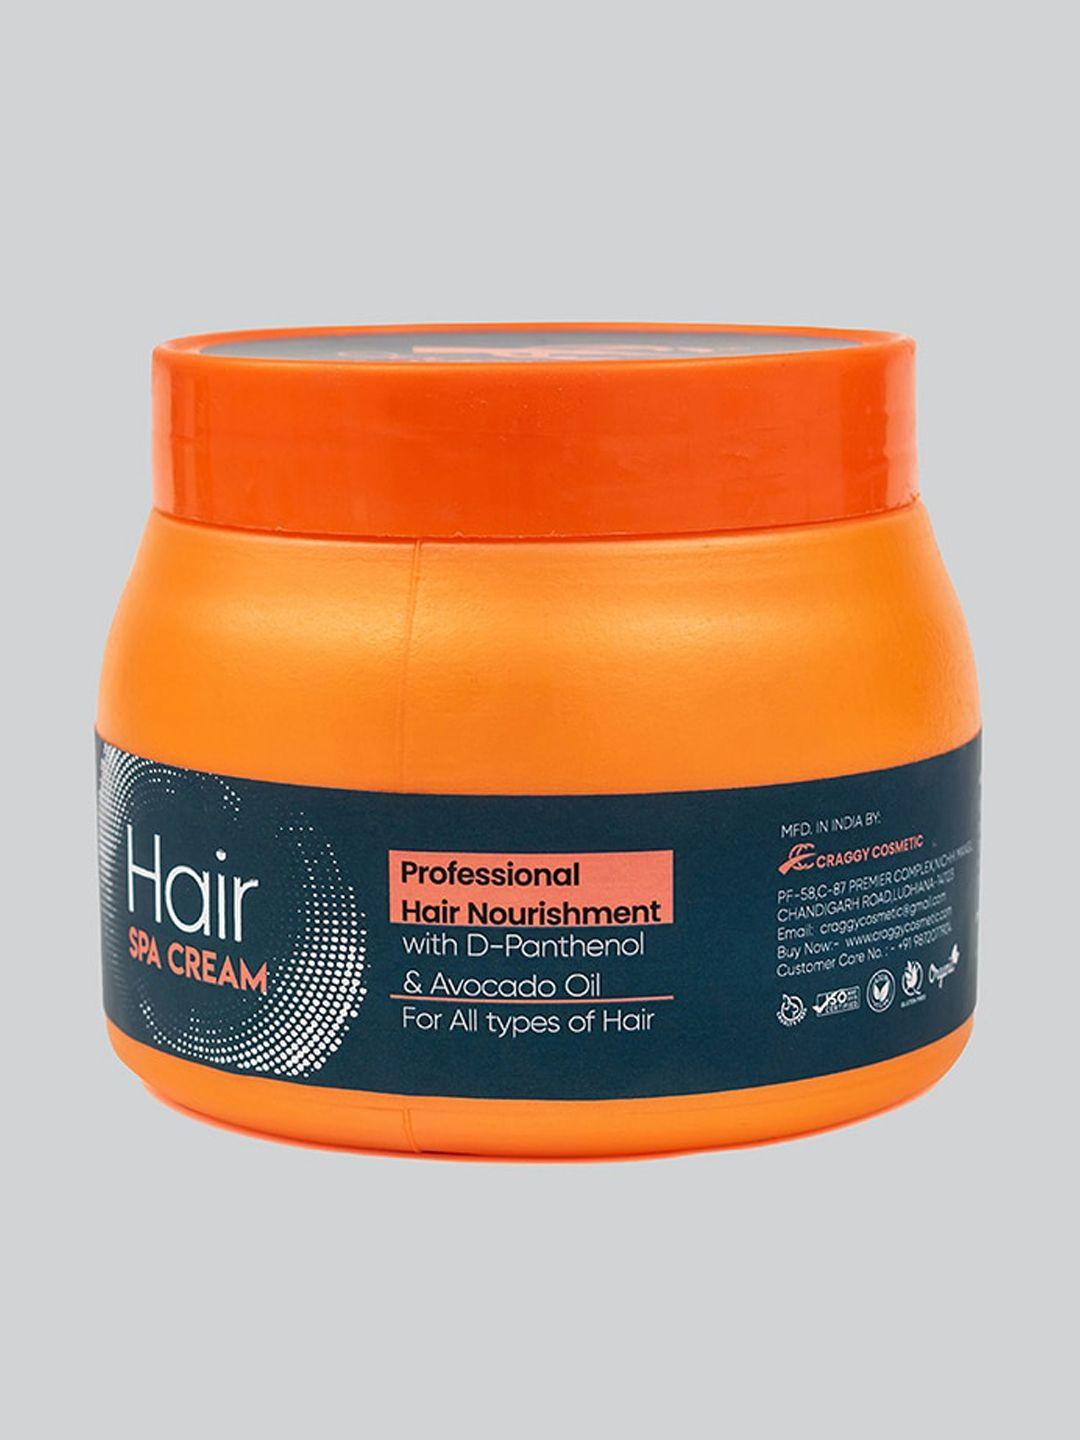 craggy-cosmetic-professional-hair-nourishment-spa-cream-with-avocado-oil---500-g